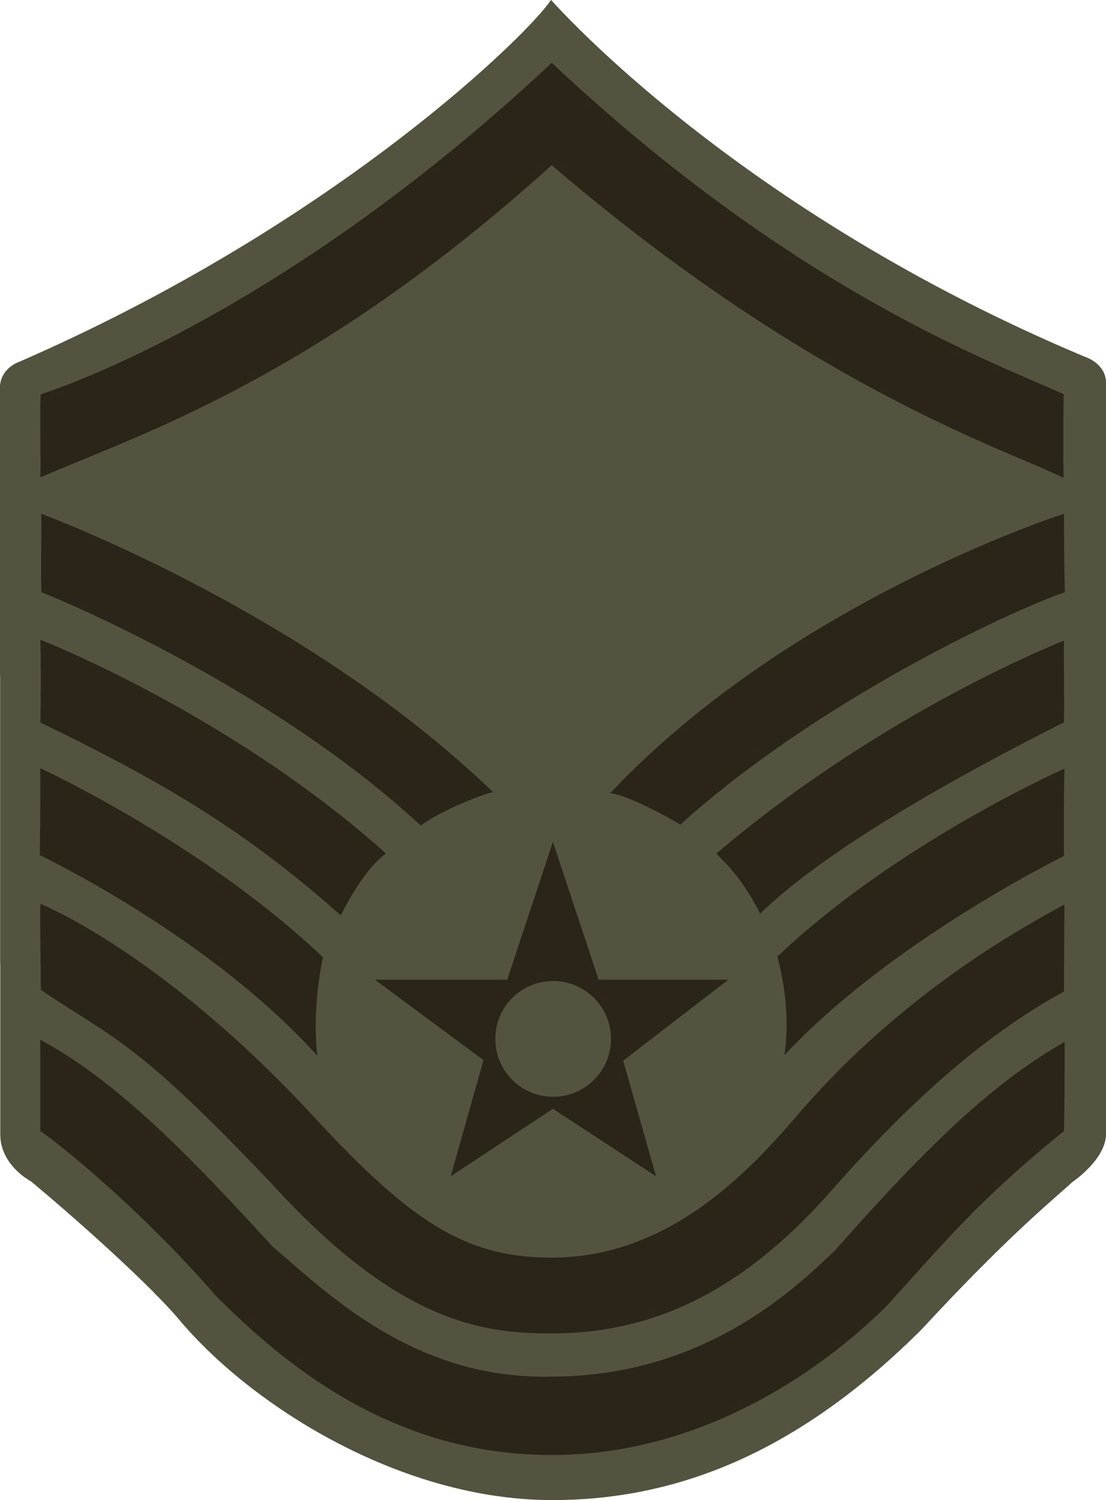 American U.S Air Force Insignia Senior Master Sergeant Rank Stripes Patch Badge